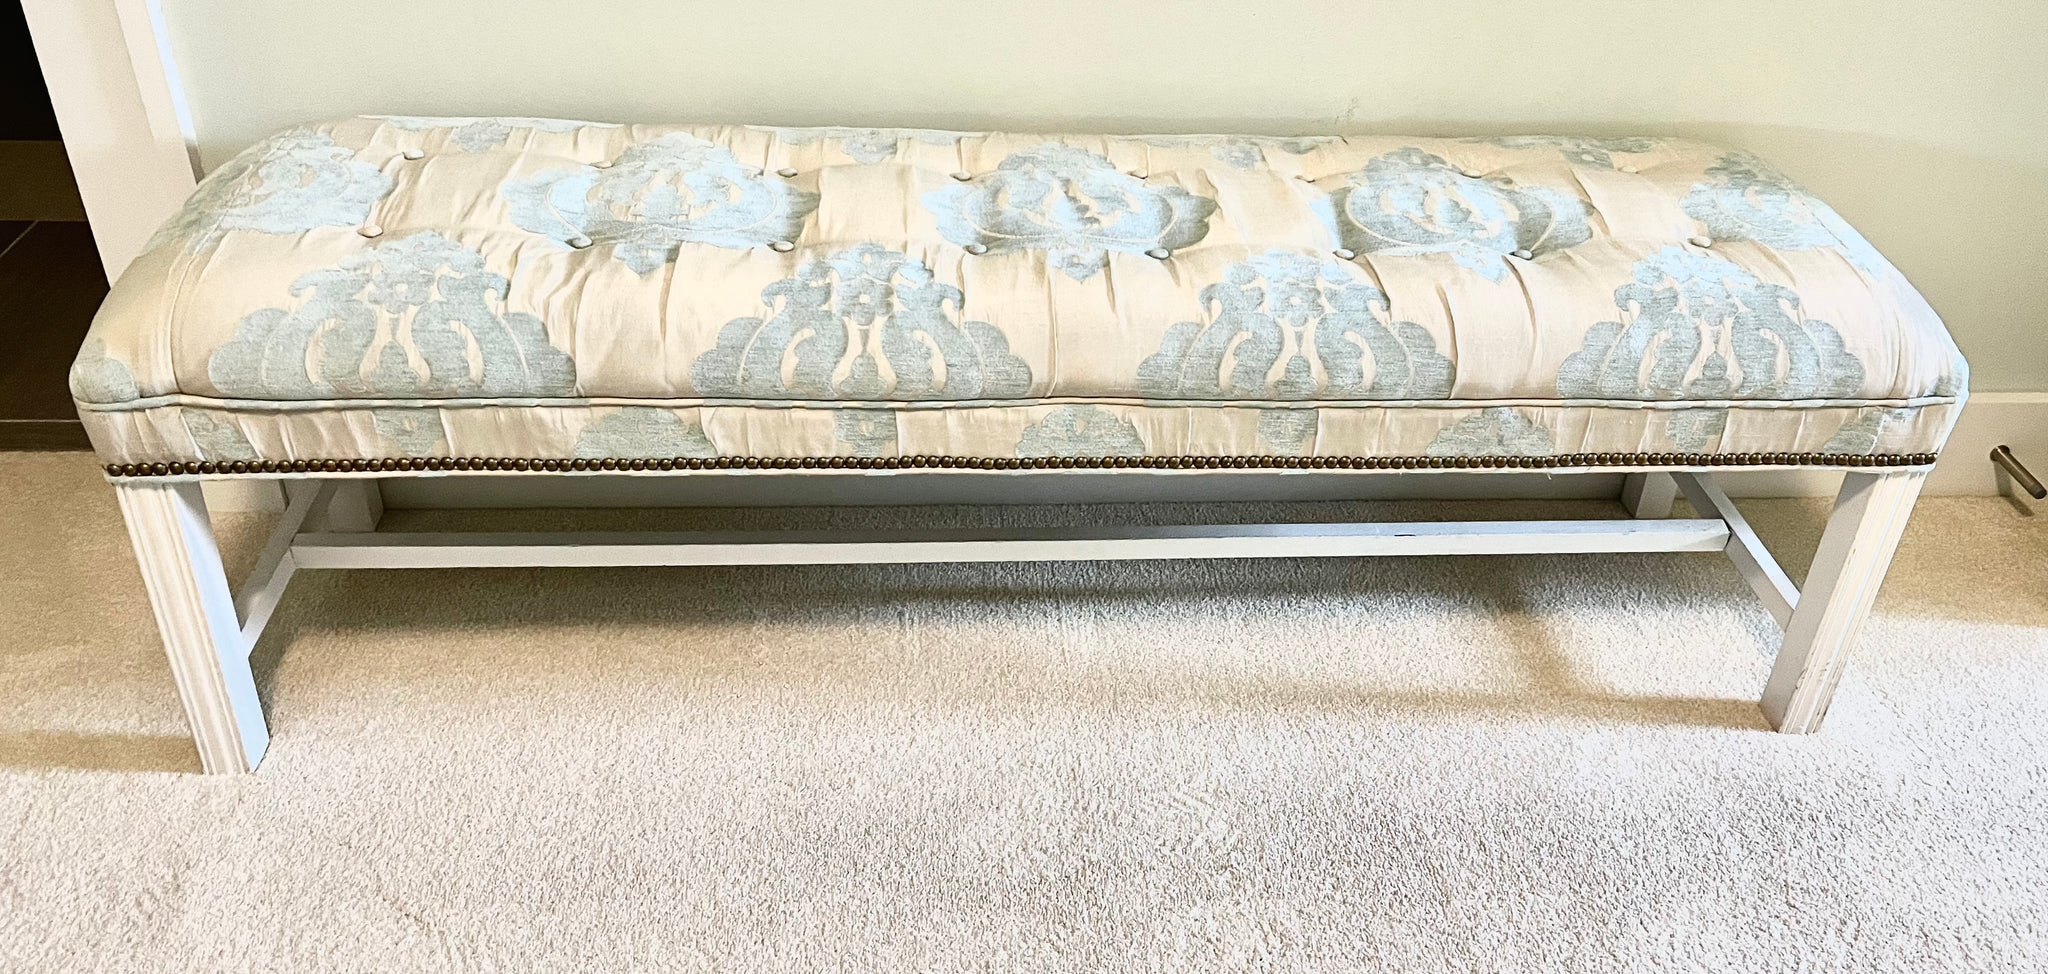 White Wood Upholstered Bench